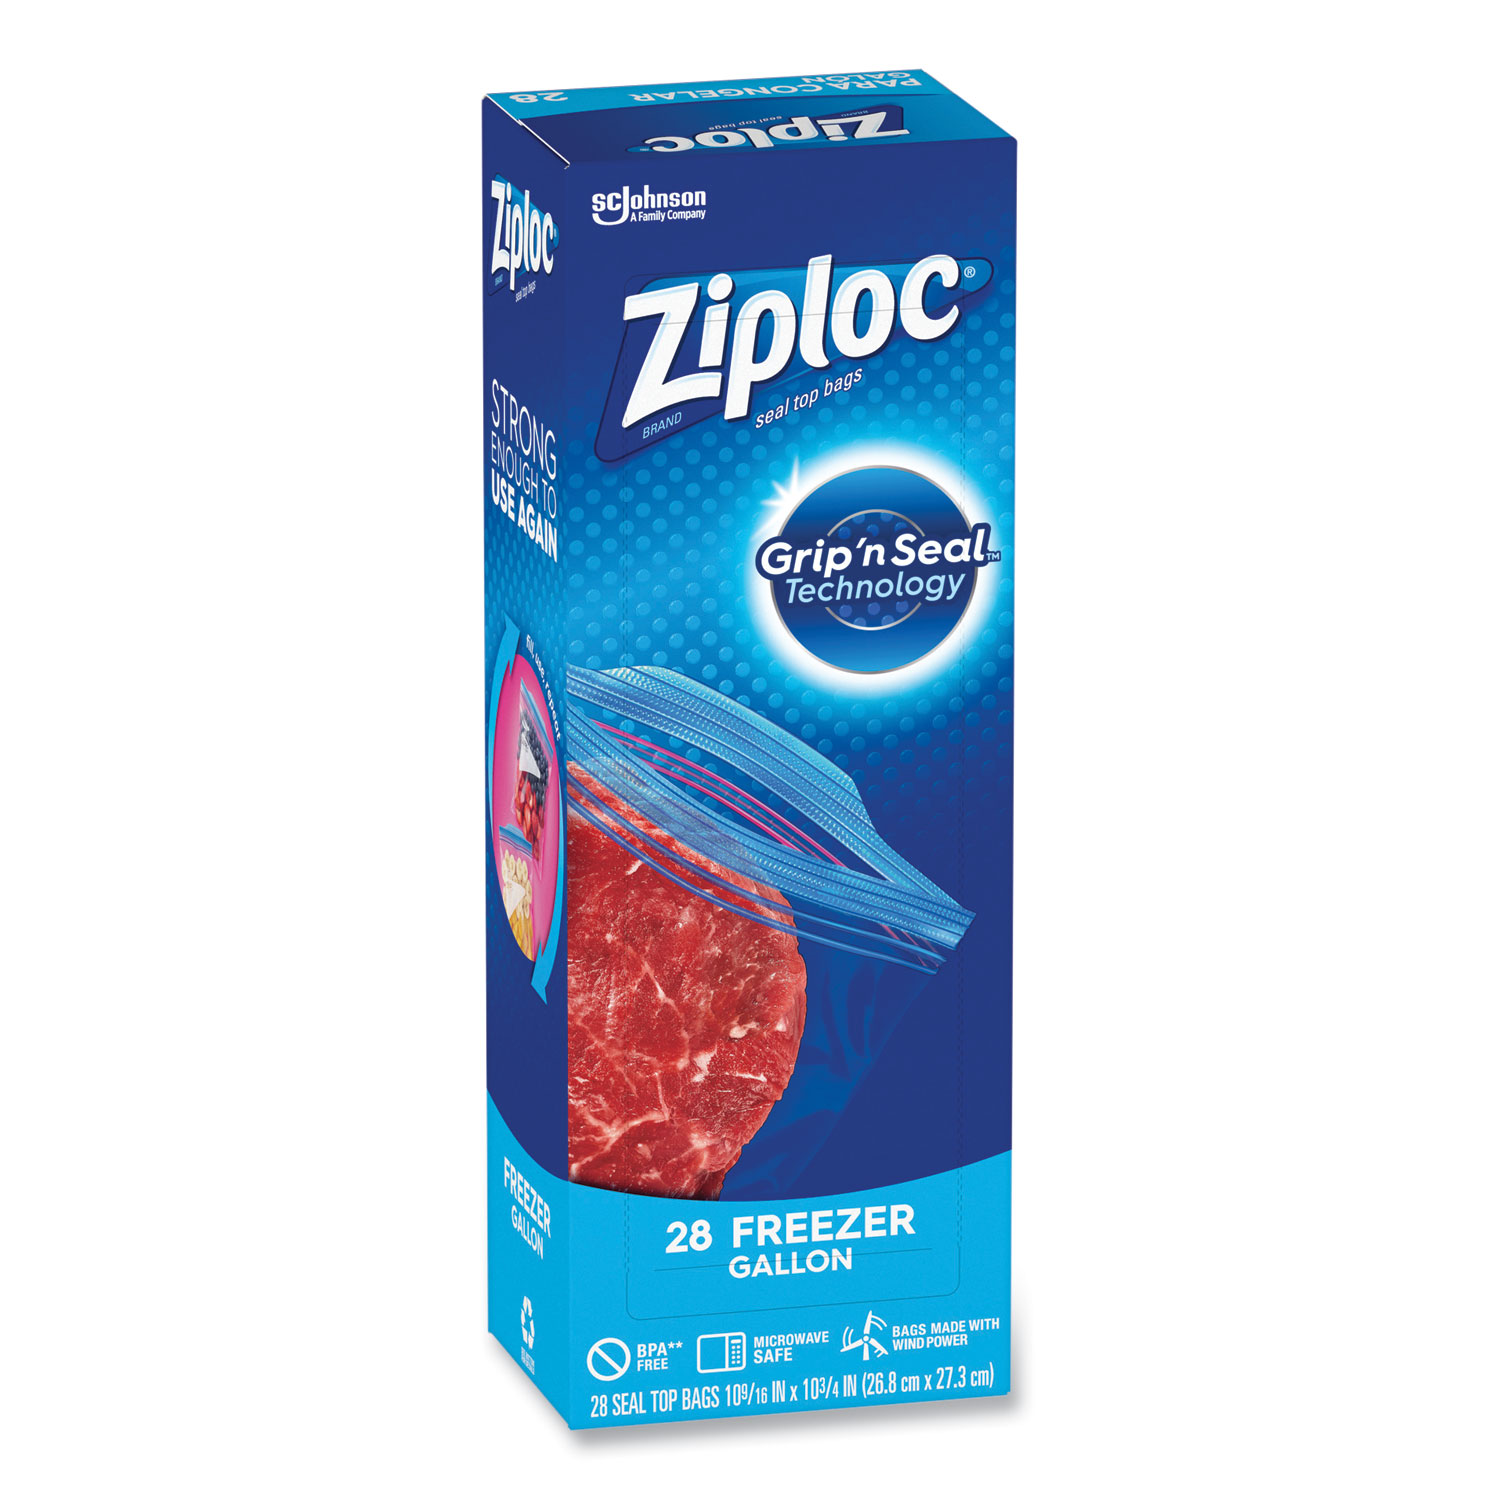 Ziploc Zipper Freezer Bags, 2 gal, 2.7 mil, 13 x 15.5, Clear, 100/Carton